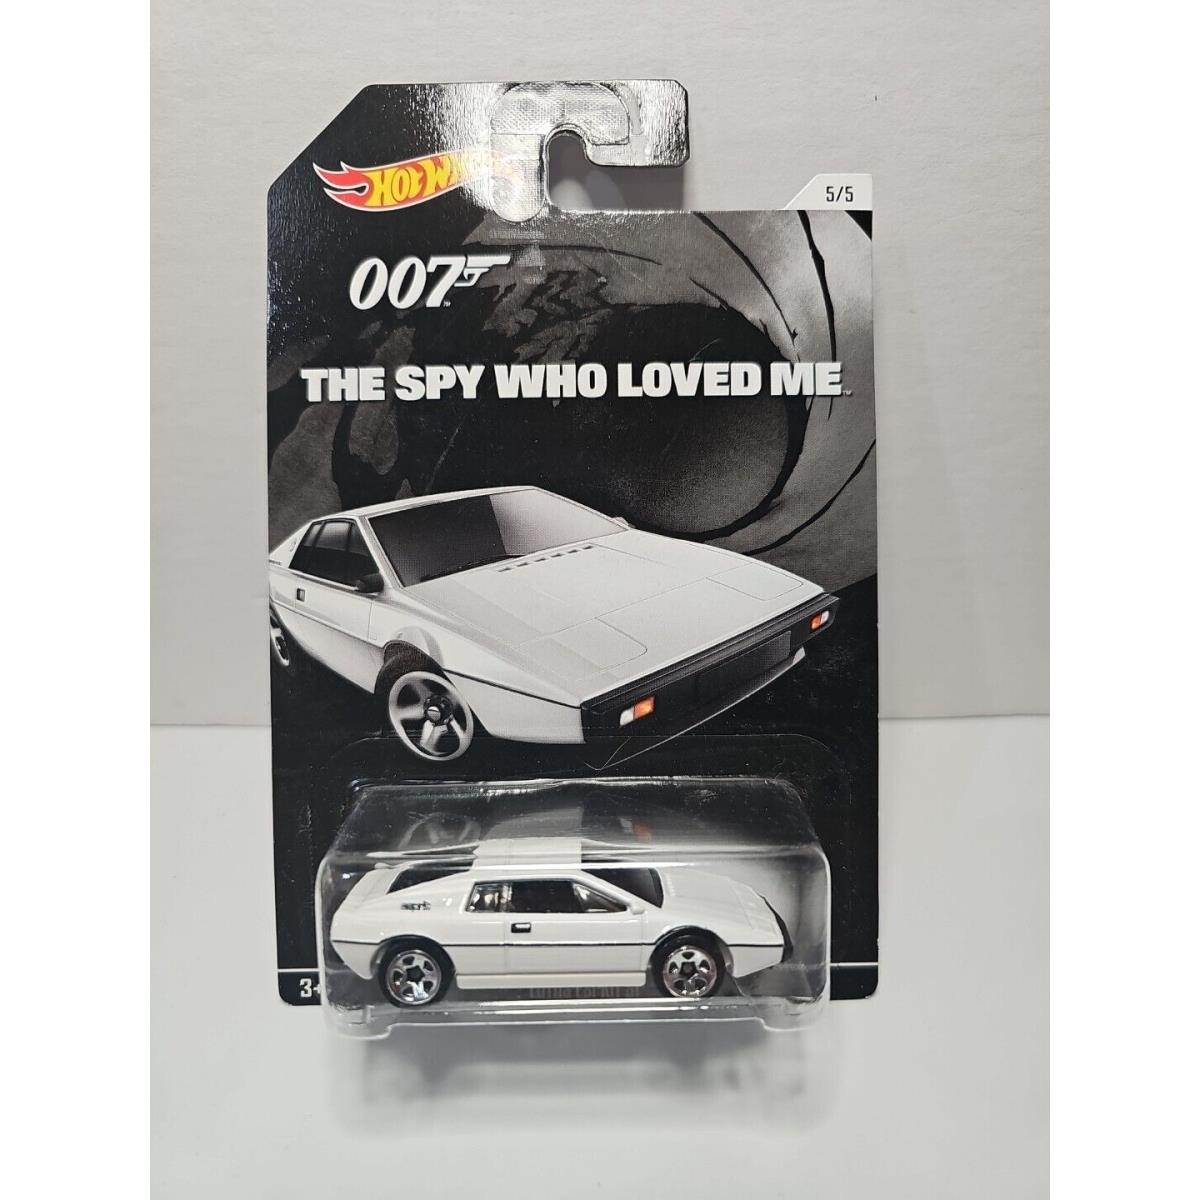 Hot Wheels James Bond 007 Series Complete Set of 5 Cars